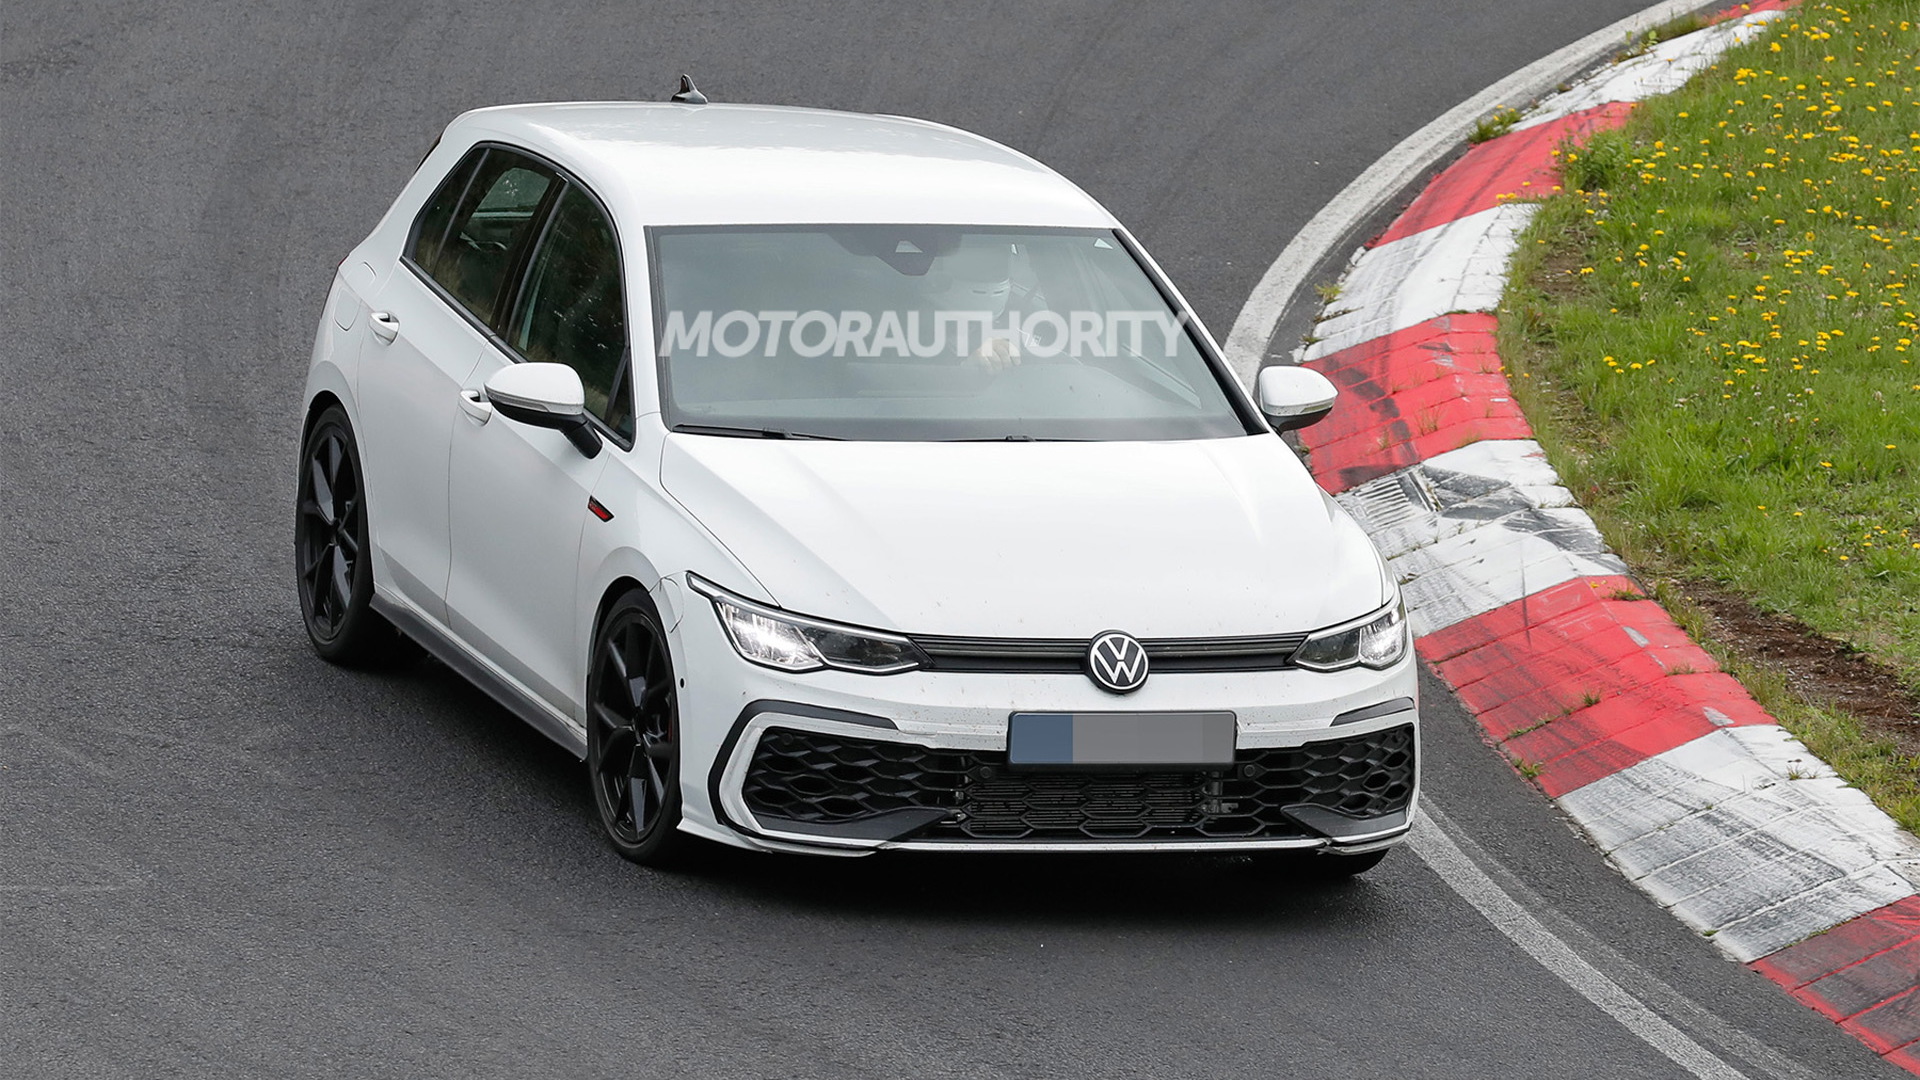 2025 Volkswagen Golf GTI facelift spy shots - Photo credit: Baldauf